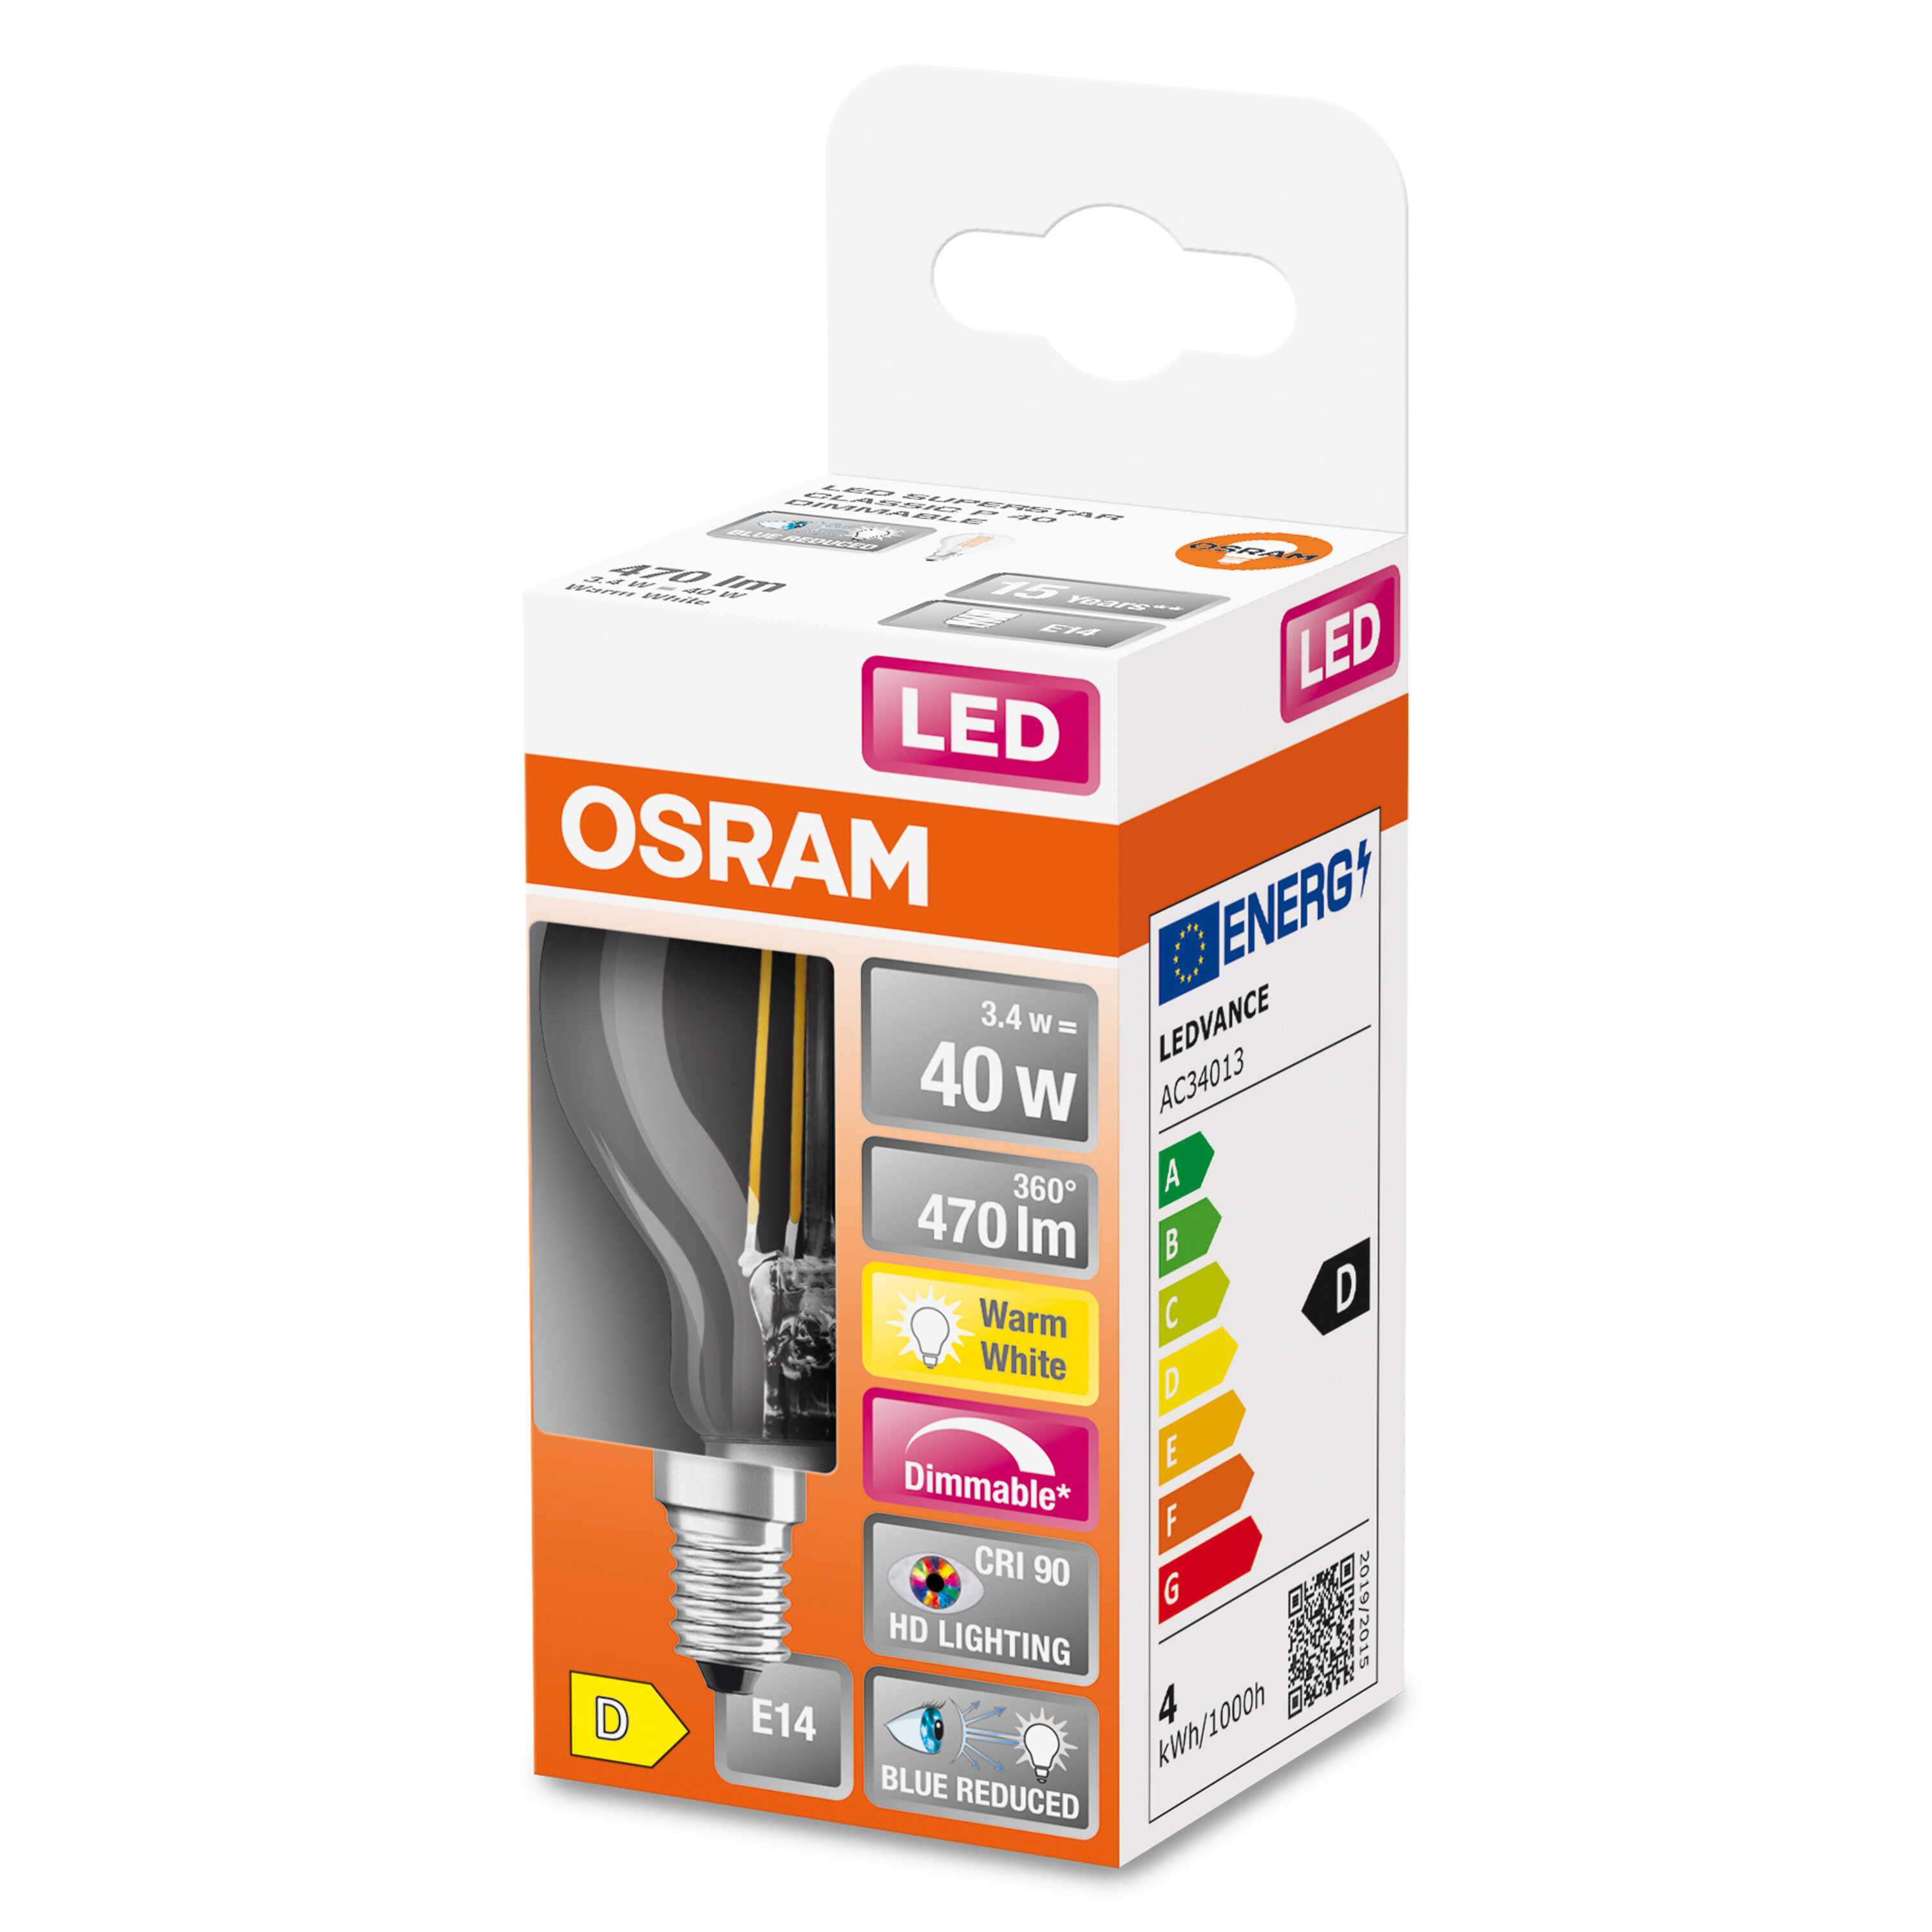 OSRAM  LED SUPERSTAR PLUS CLASSIC FILAMENT Warmweiß Lampe P LED Lumen 470